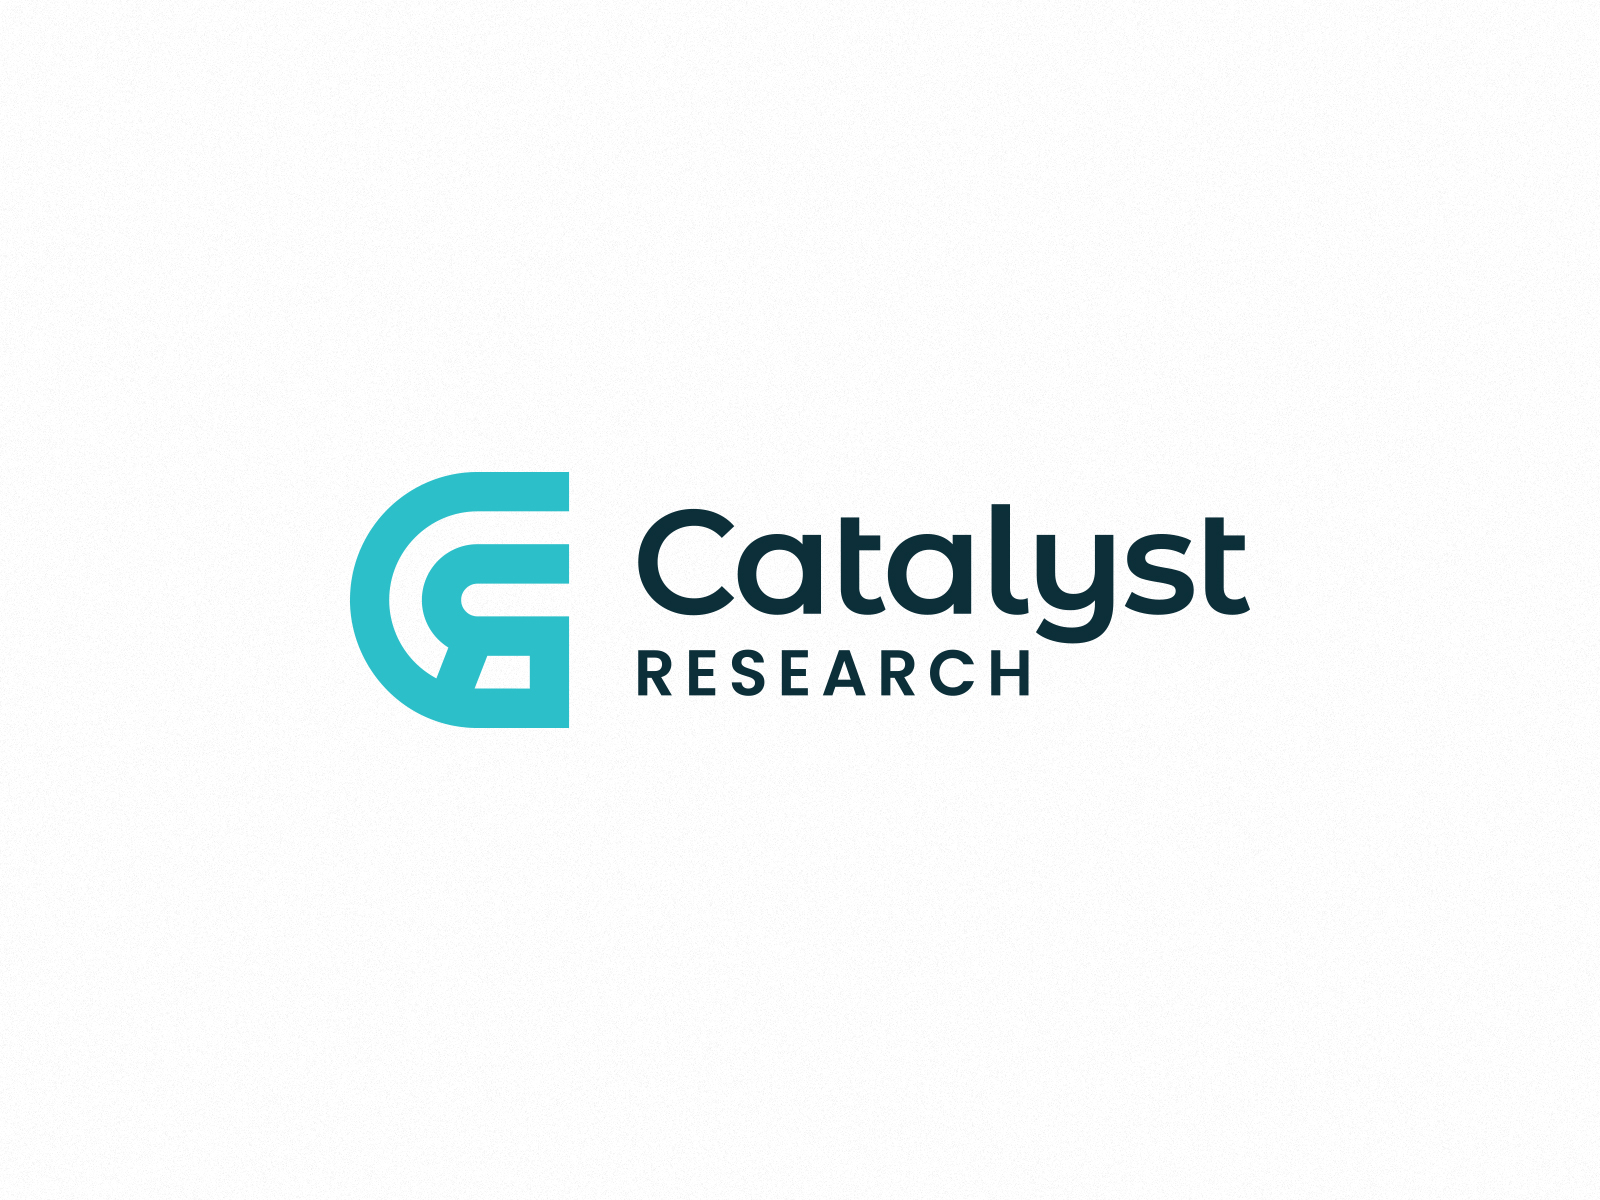 research company logo